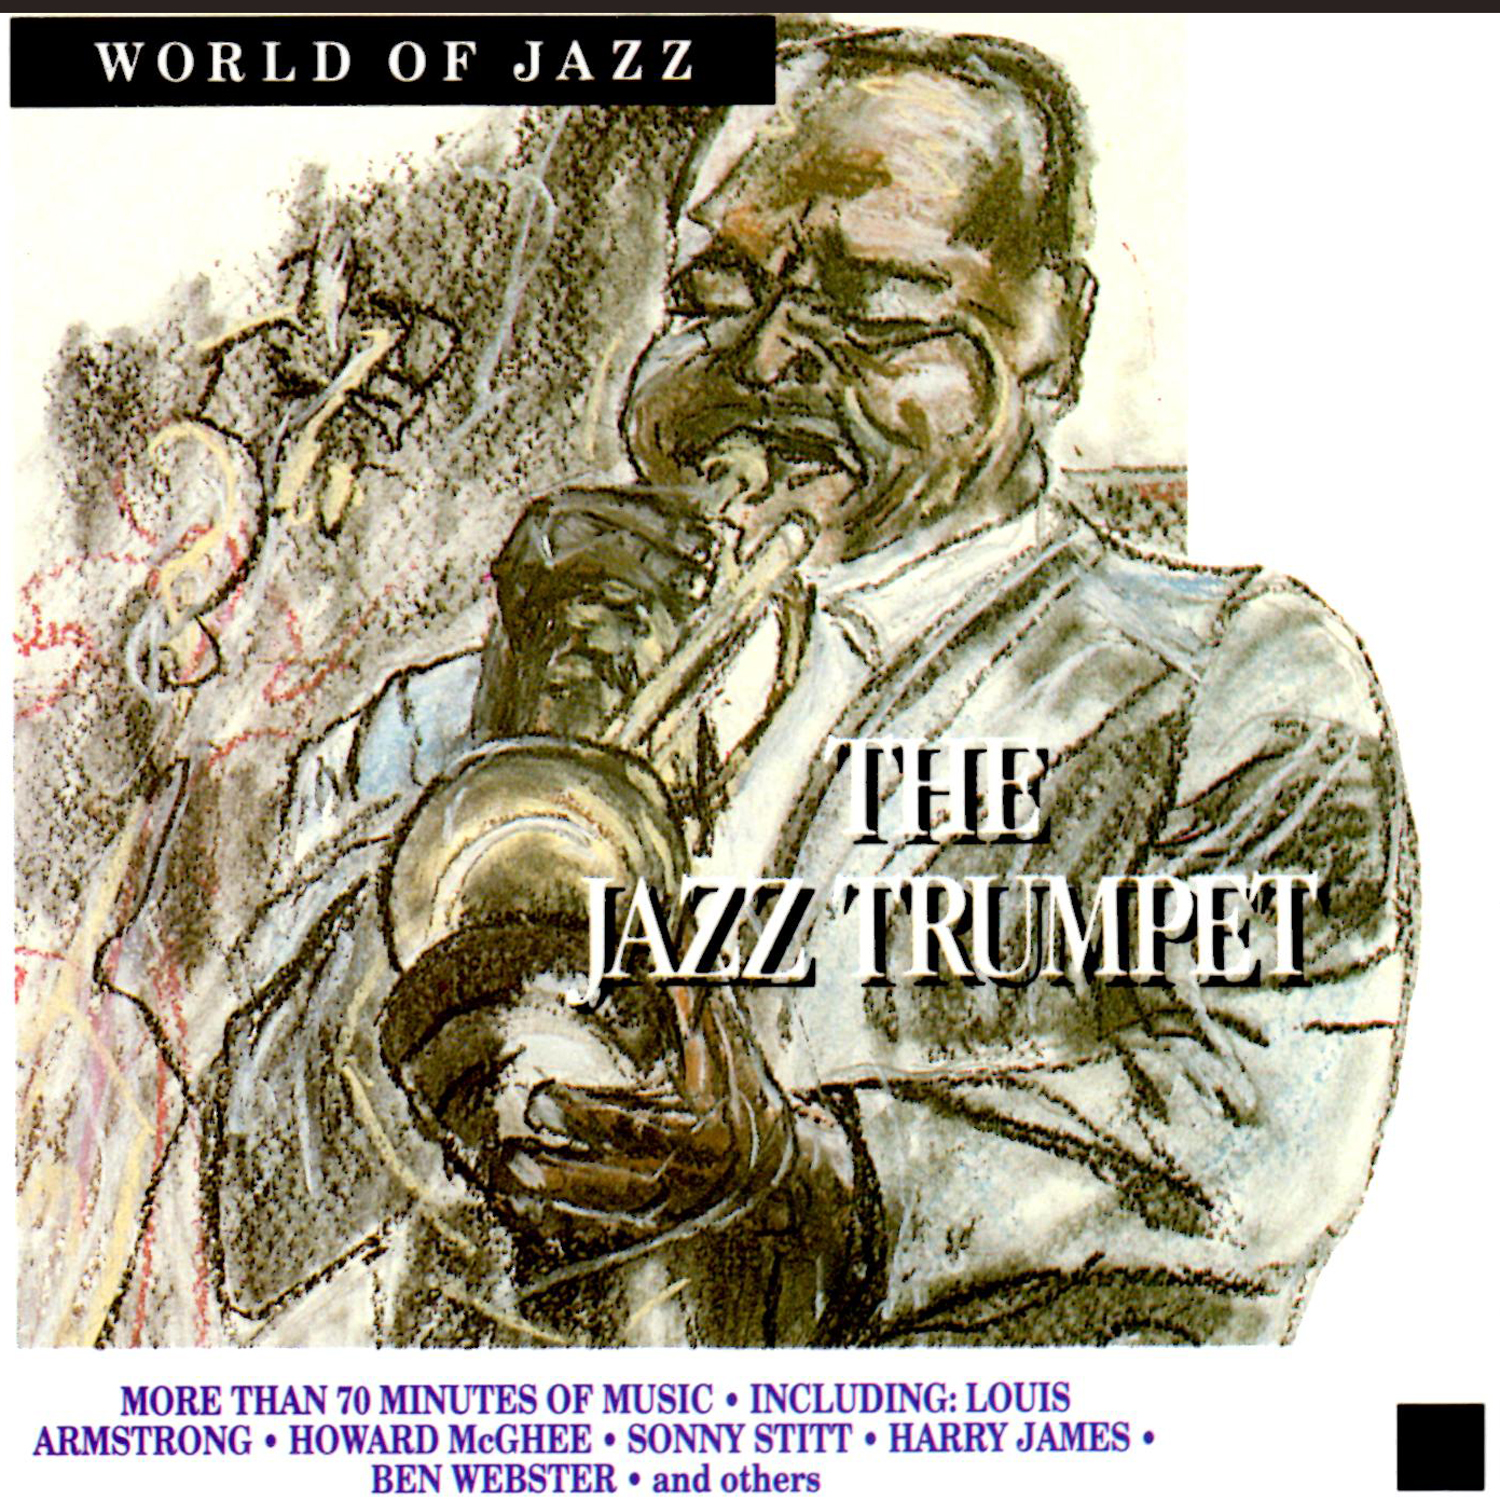 World of Jazz: The Jazz Trumpet